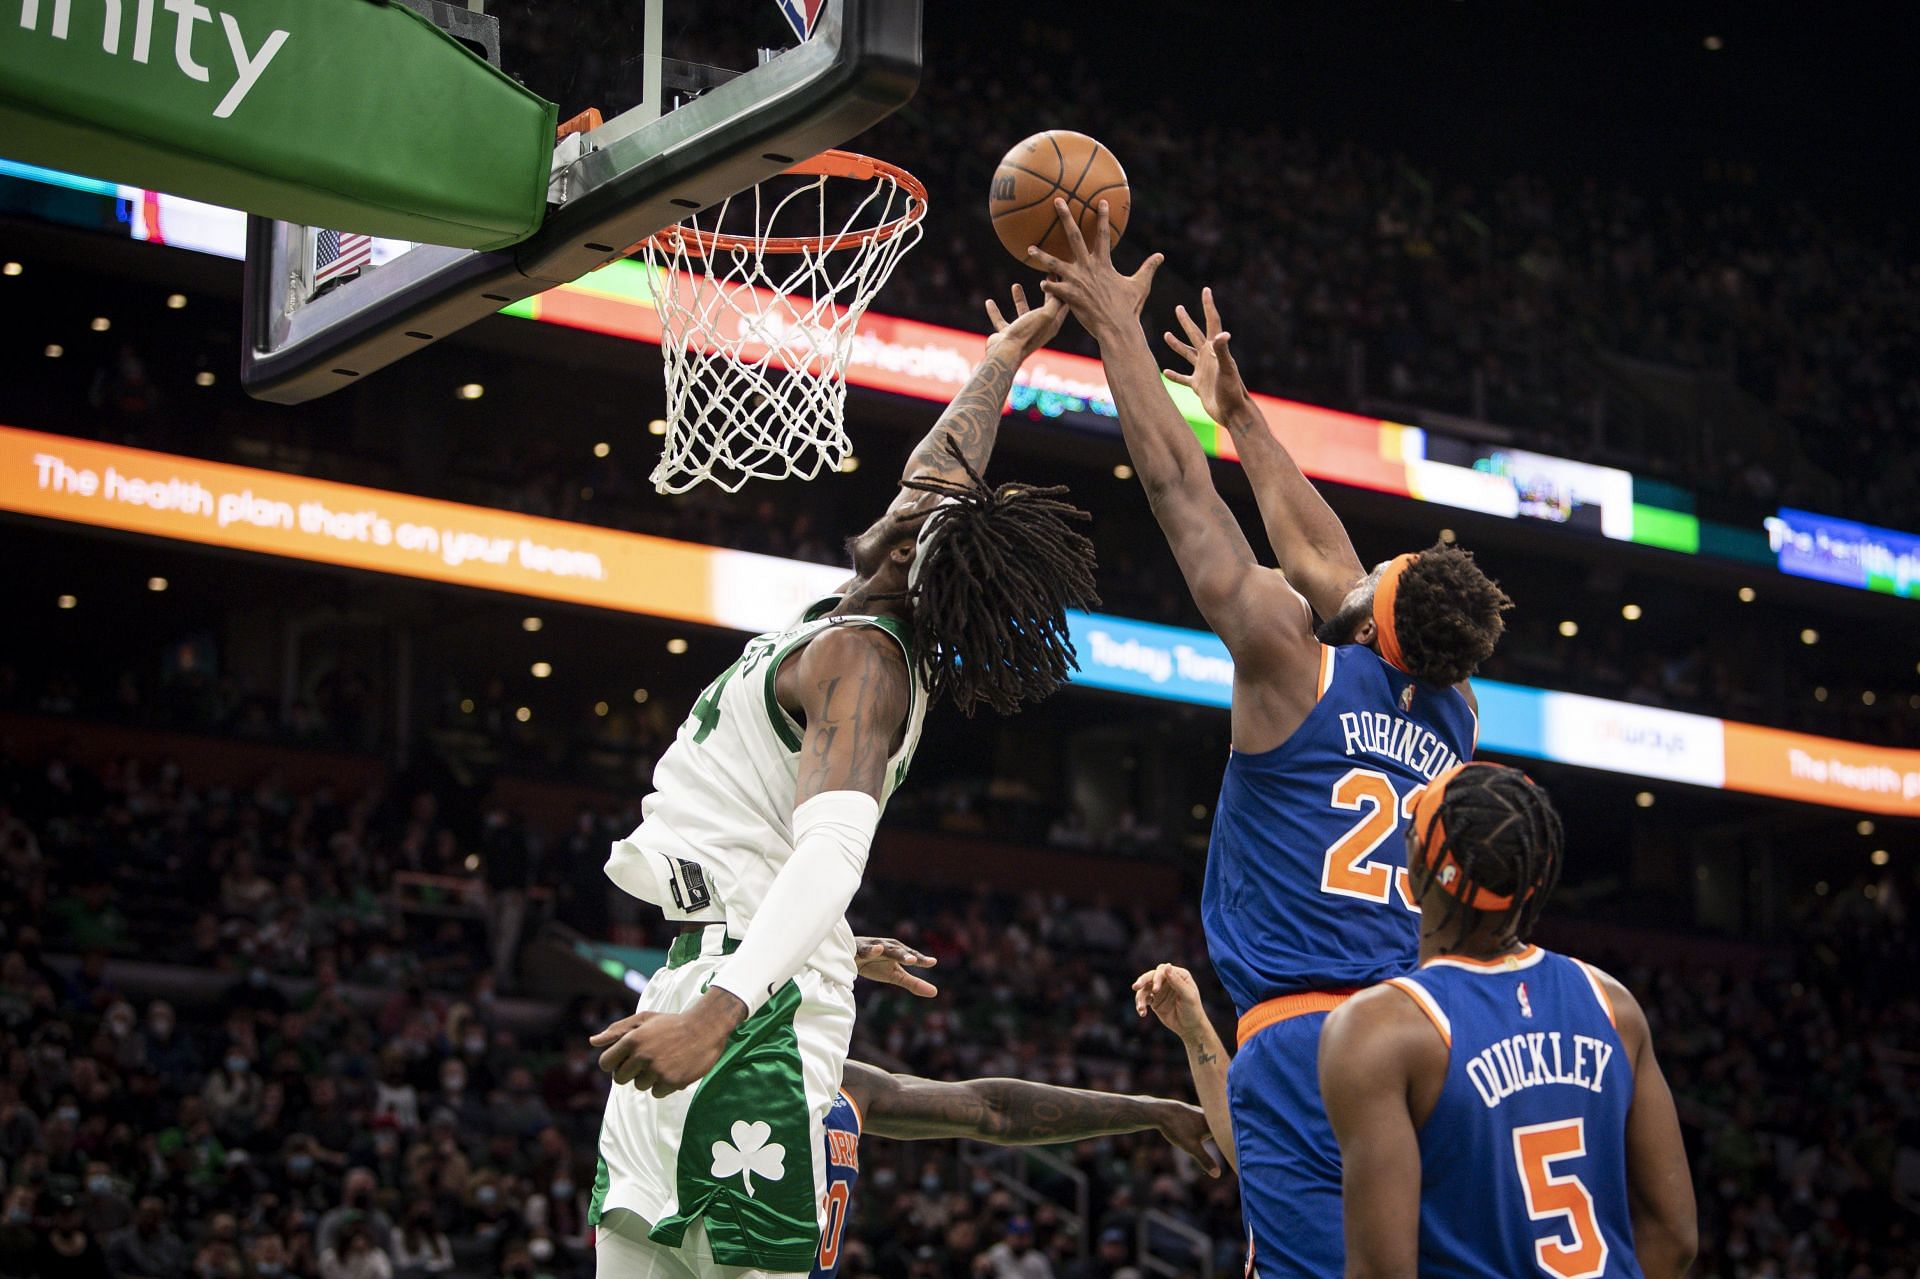 New York Knicks vs Boston Celtics